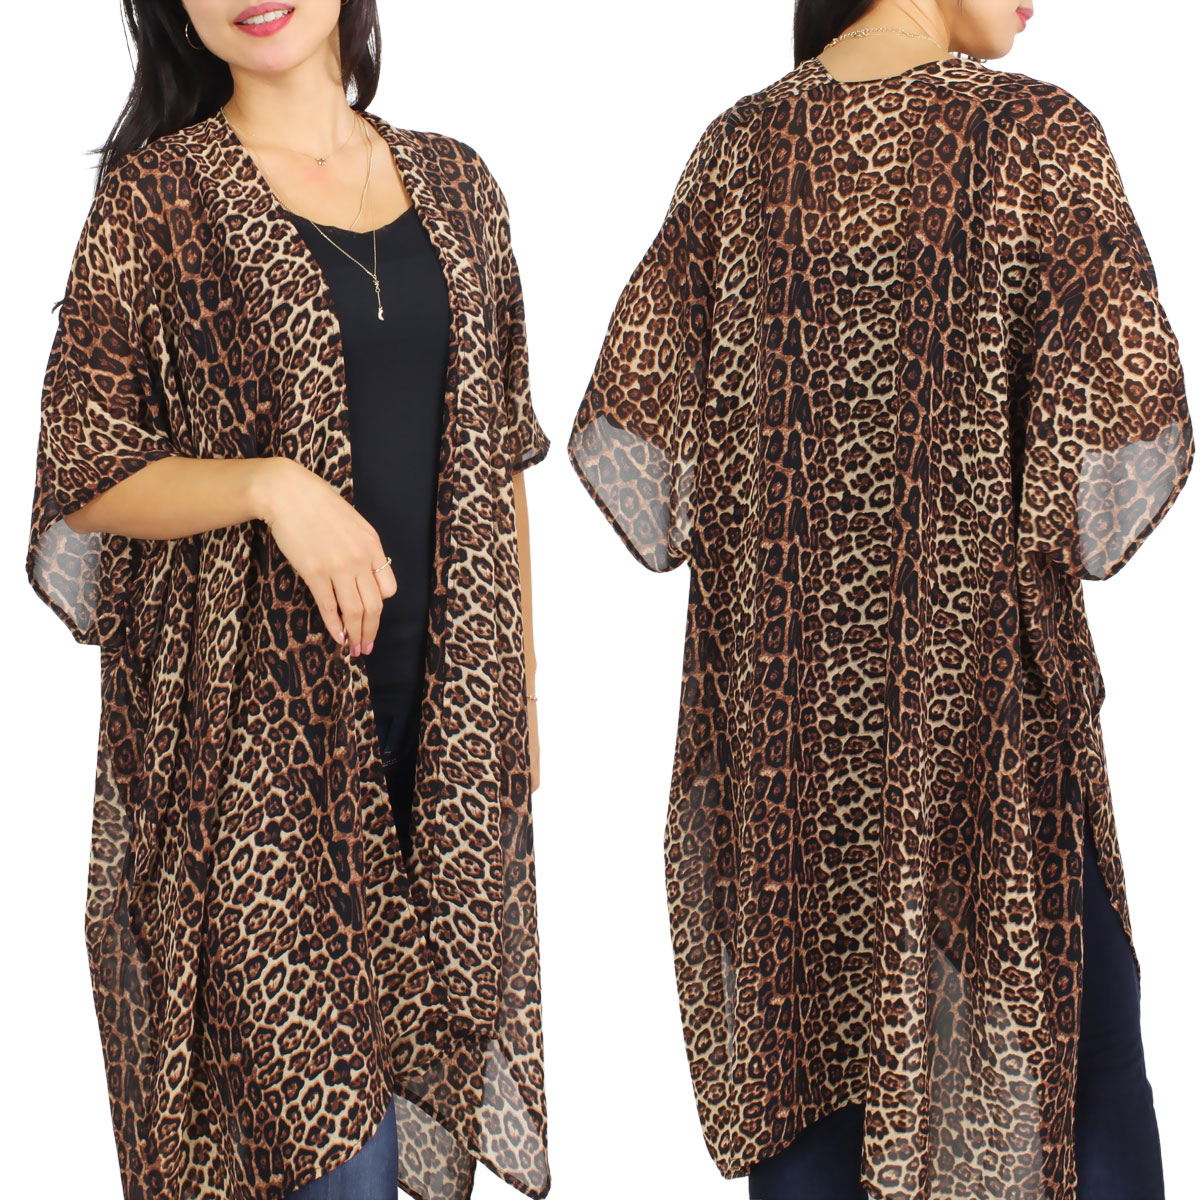 Kimono - Leopard Print 9954